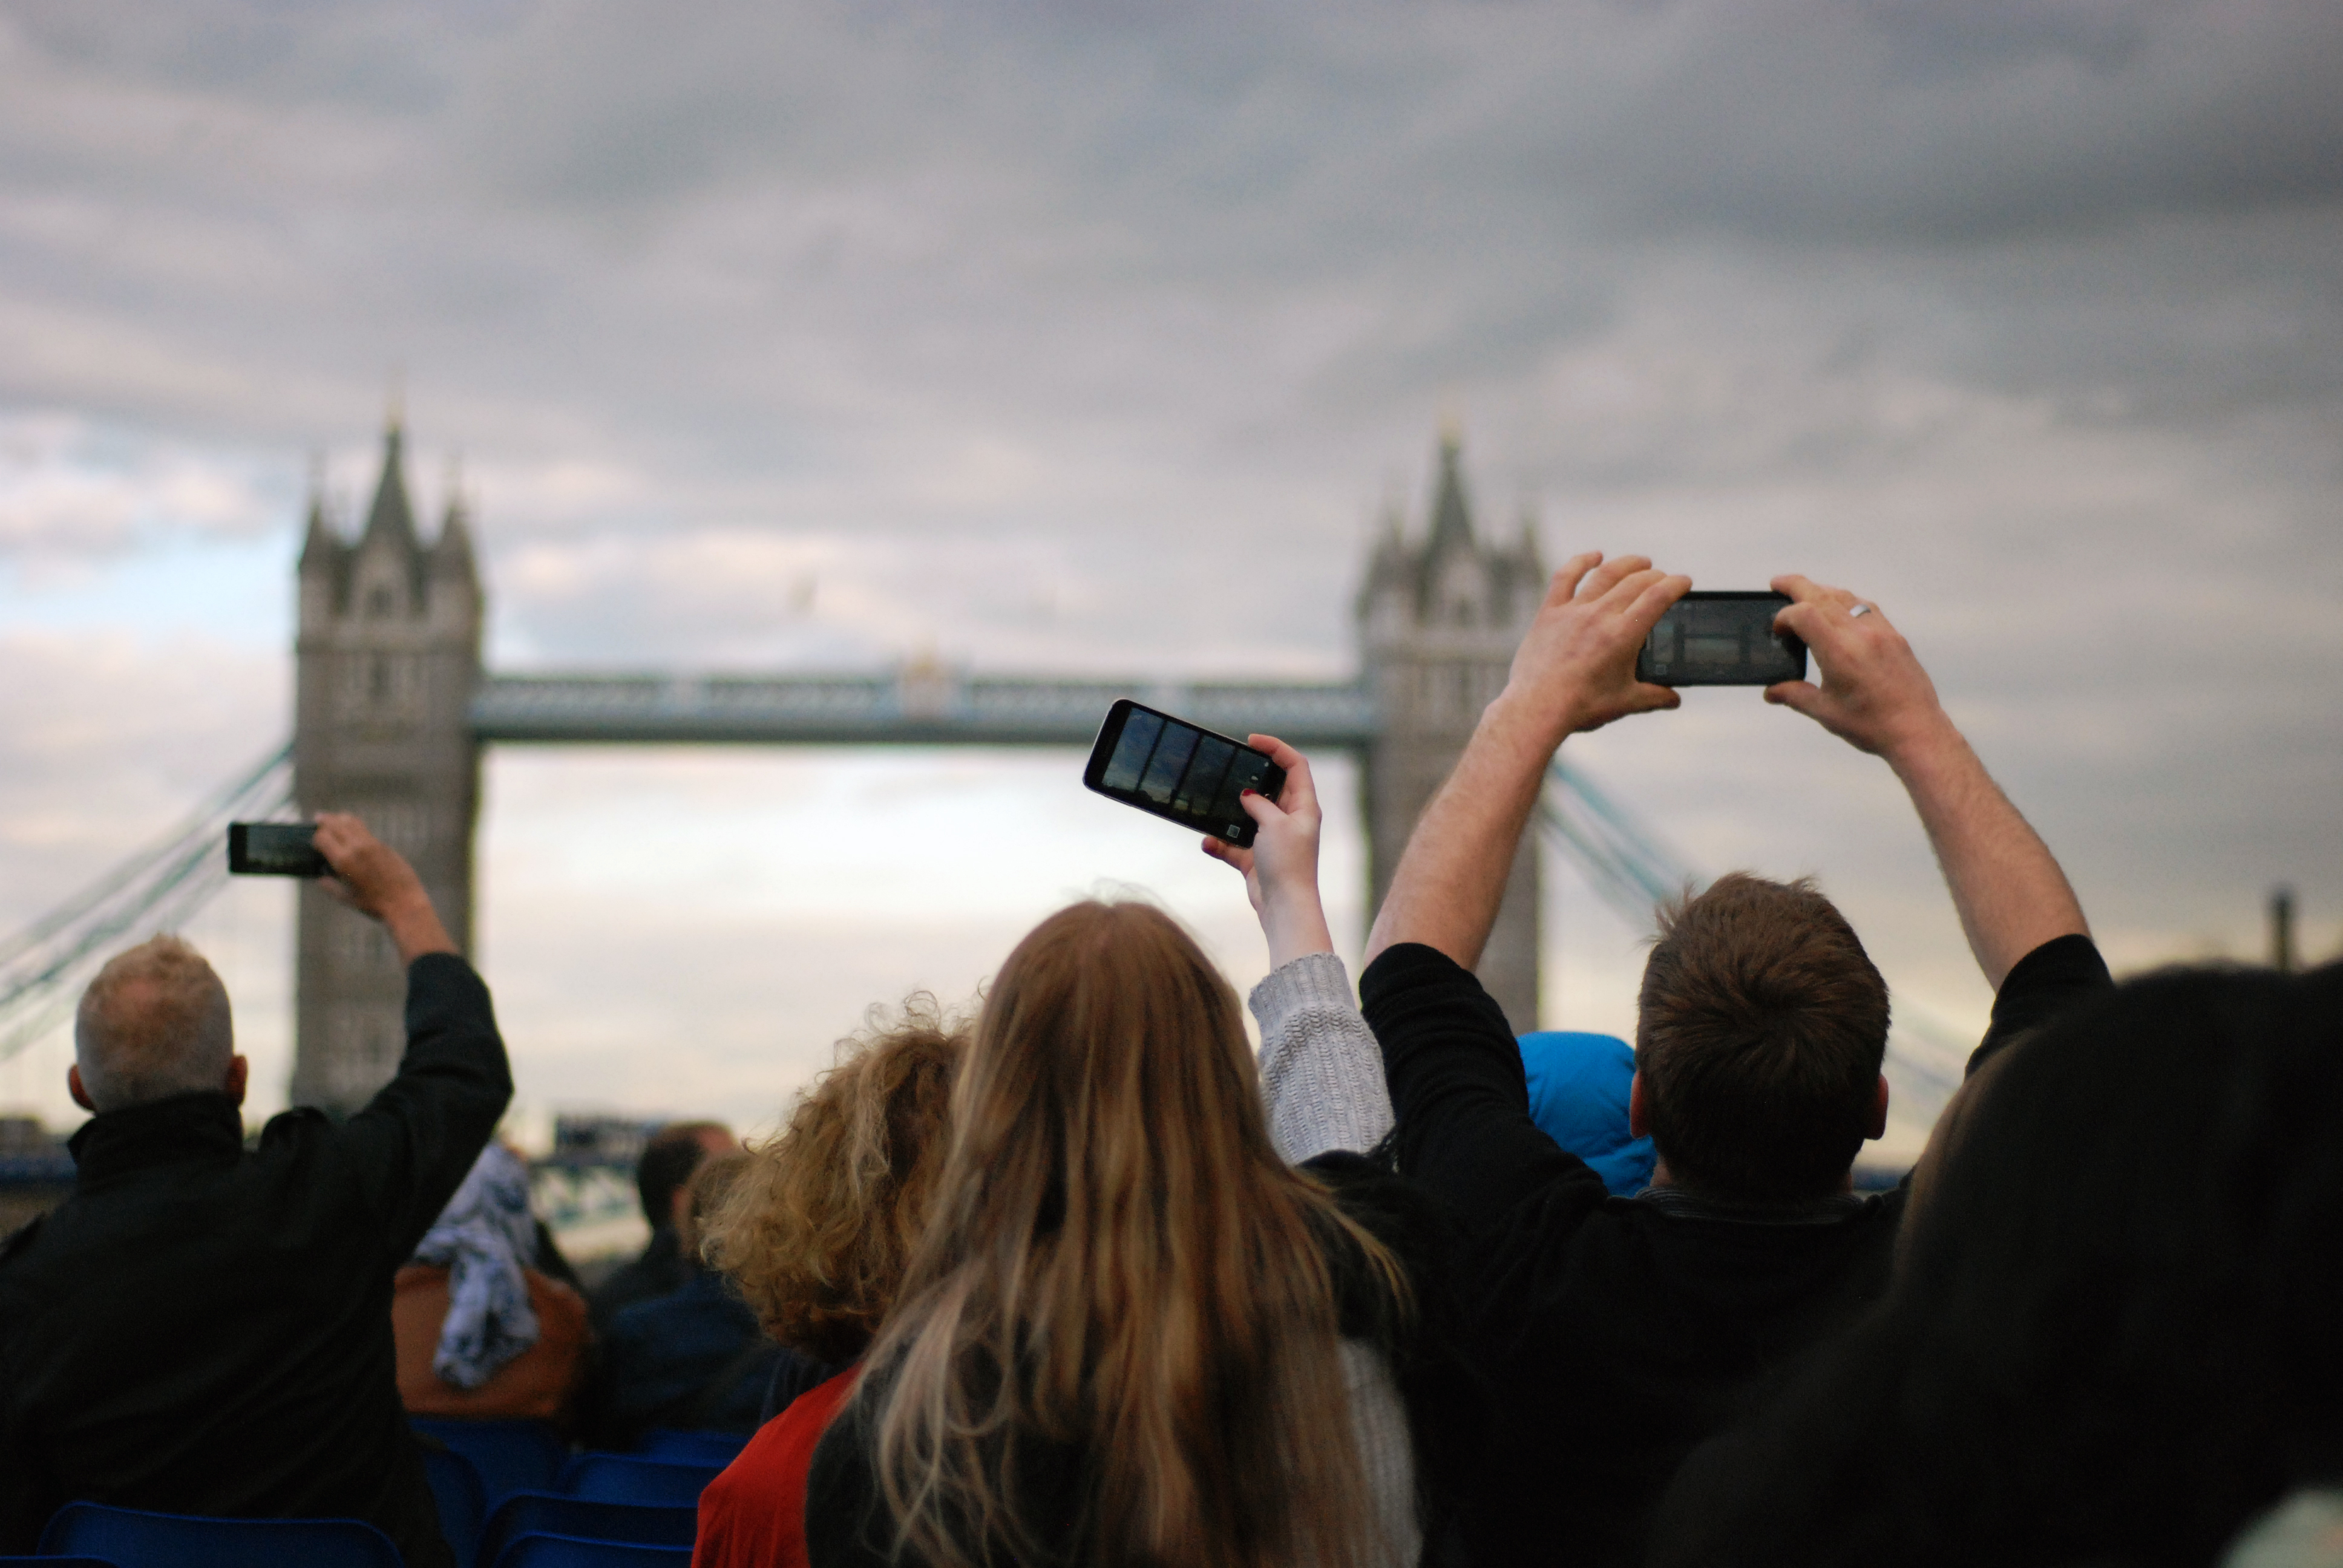 Near crowd. Туристы фотографируют. Туристы в Великобритании. Турист с фотоаппаратом. Люди фотографируют достопримечательности.